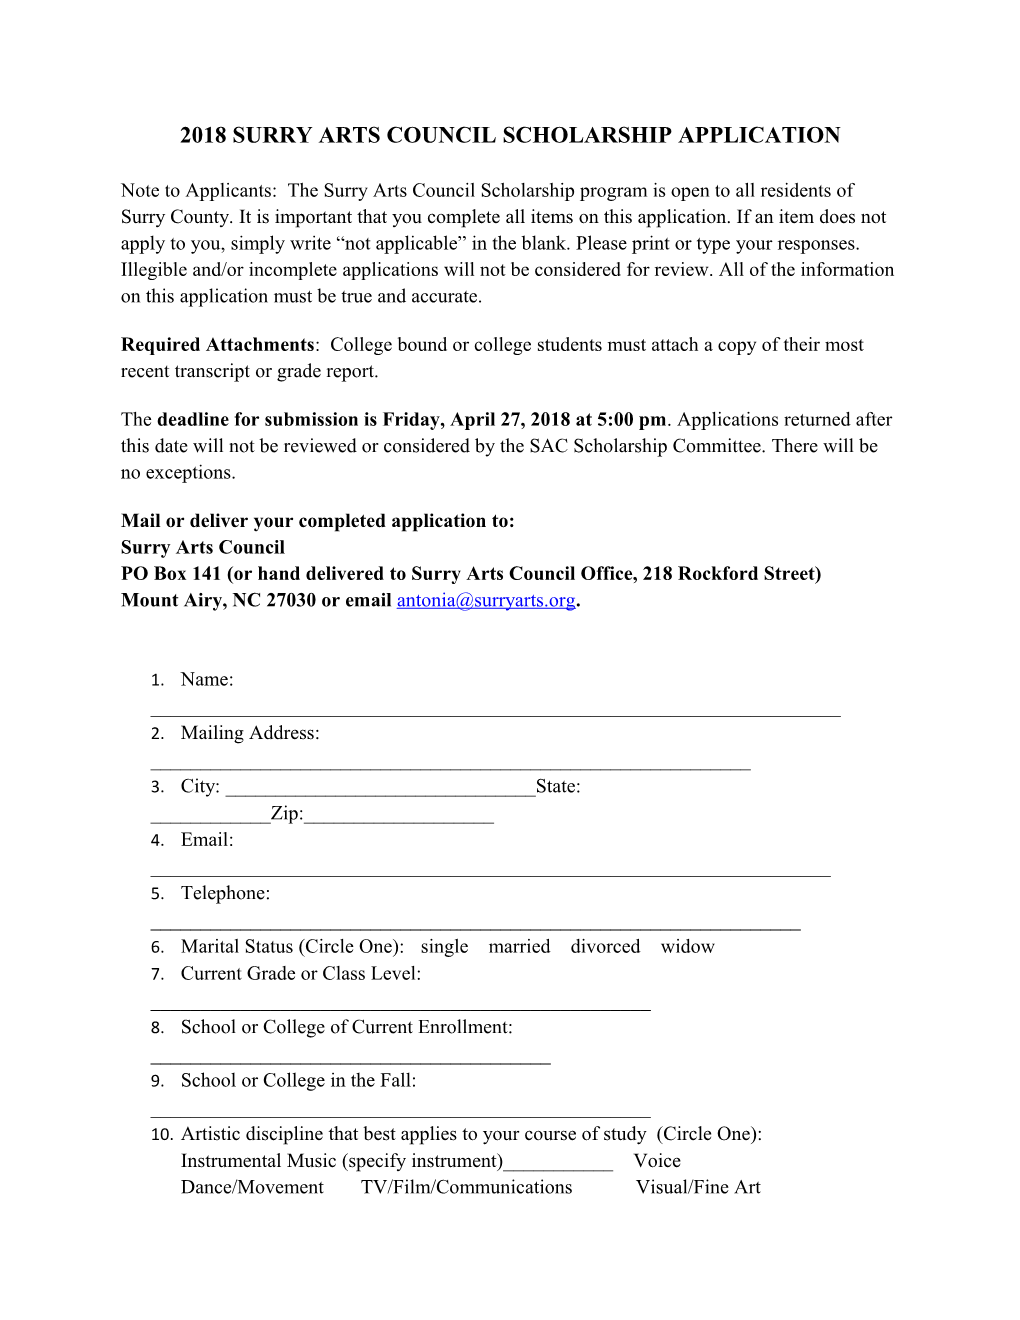 2018Surry Arts Council Scholarship Application